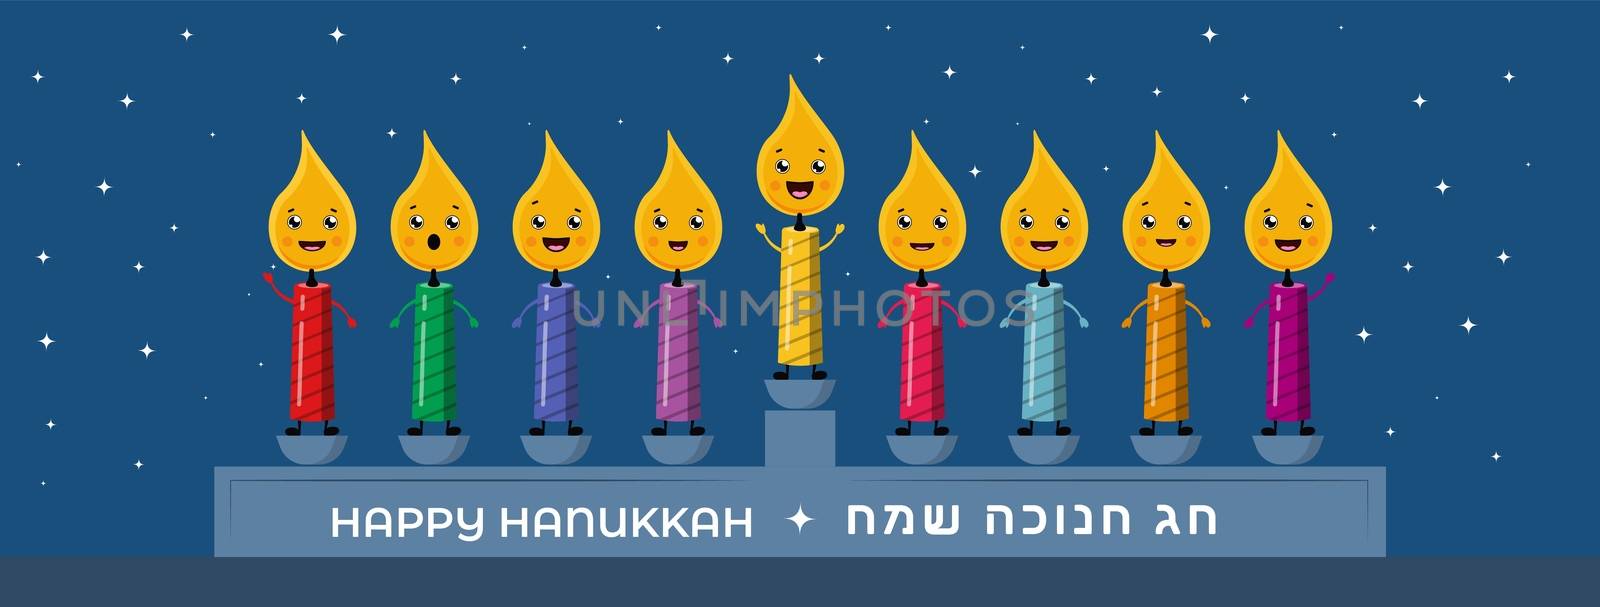 Hanukkah cartoon kawaii candles. Cute clipart of cartoon Chanukkah traditional menorah candelabra hanukiya with singing and smiling flame candles characters, night sky stars. Happy Hanukkah in Hebrew.